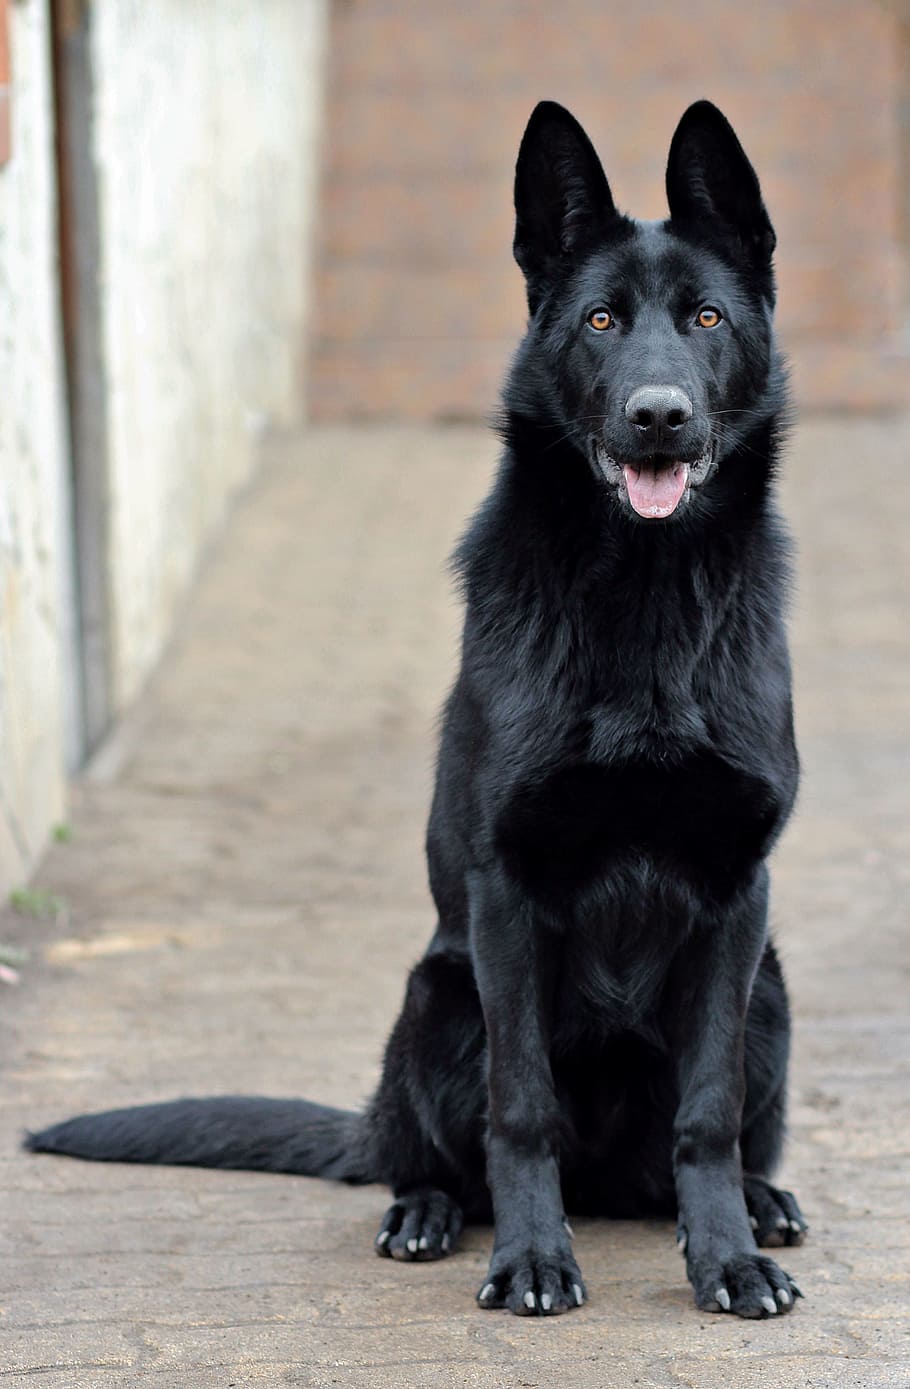 solid black German shepherd dog sitting on pavement, portrait